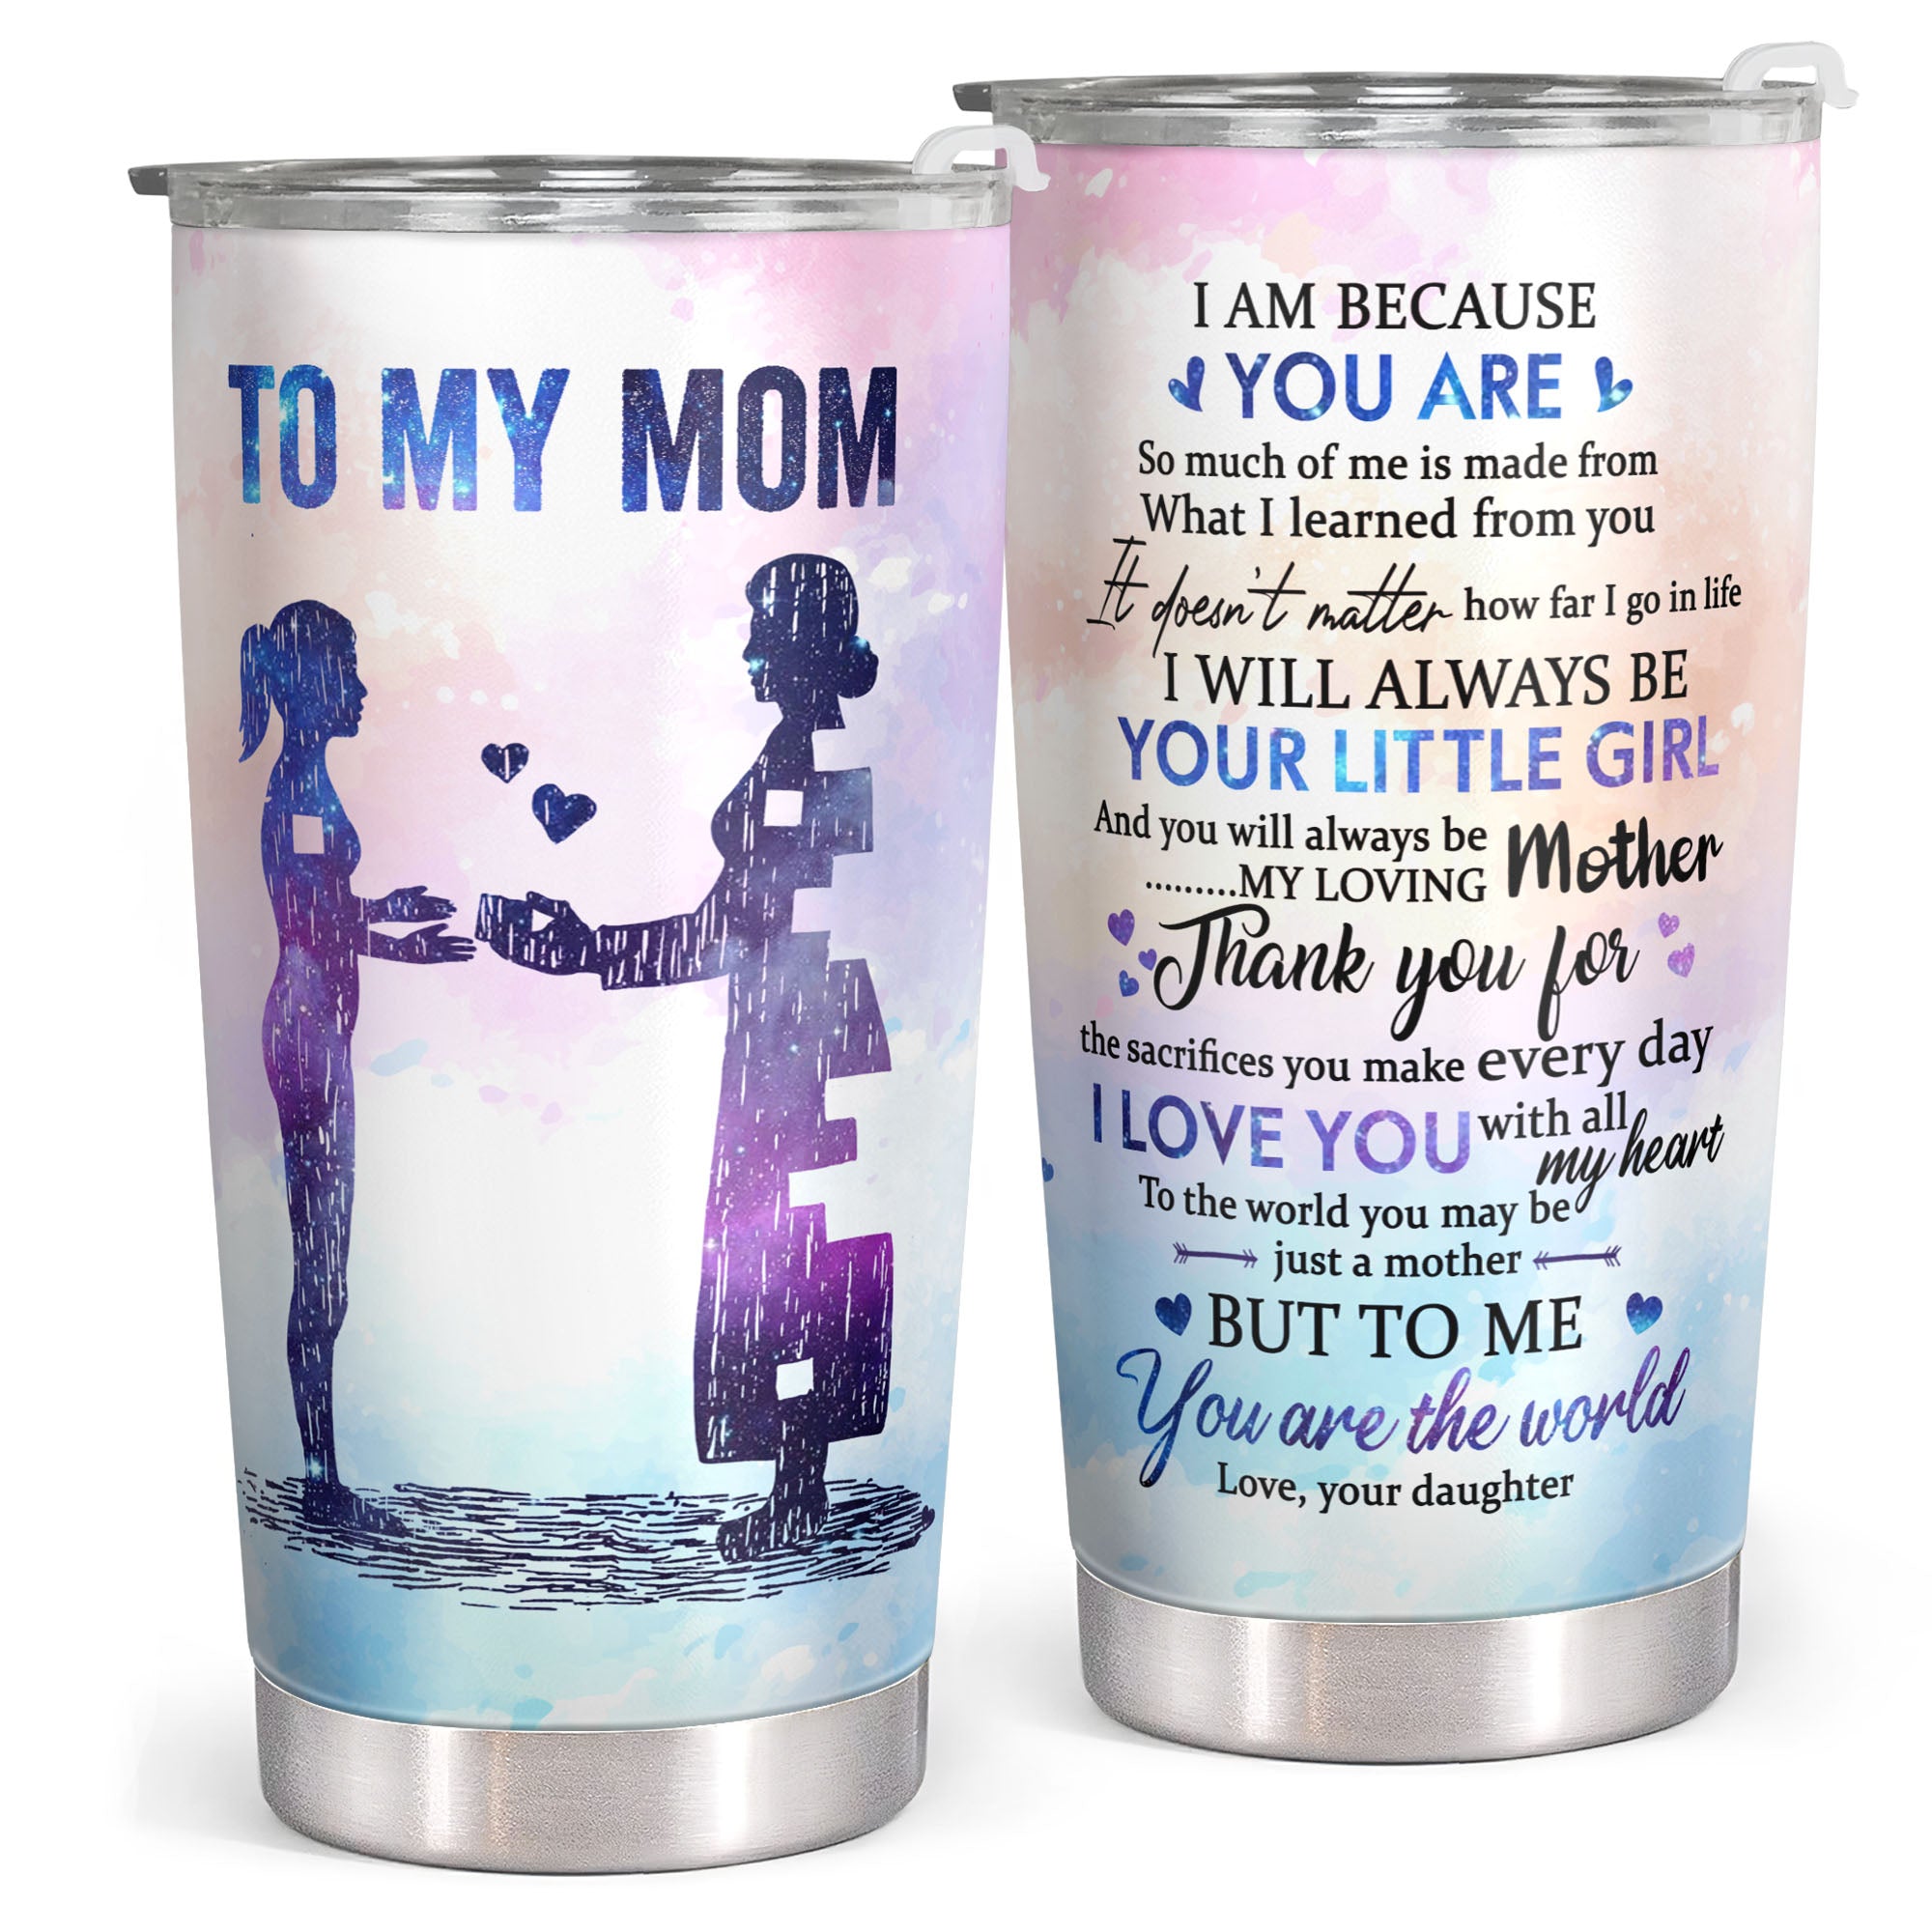 Mom Daily Affirmations Pack 1 Tumbler 20Oz - Unique Mom Birthday Gifts –  Kozmoz Inspire